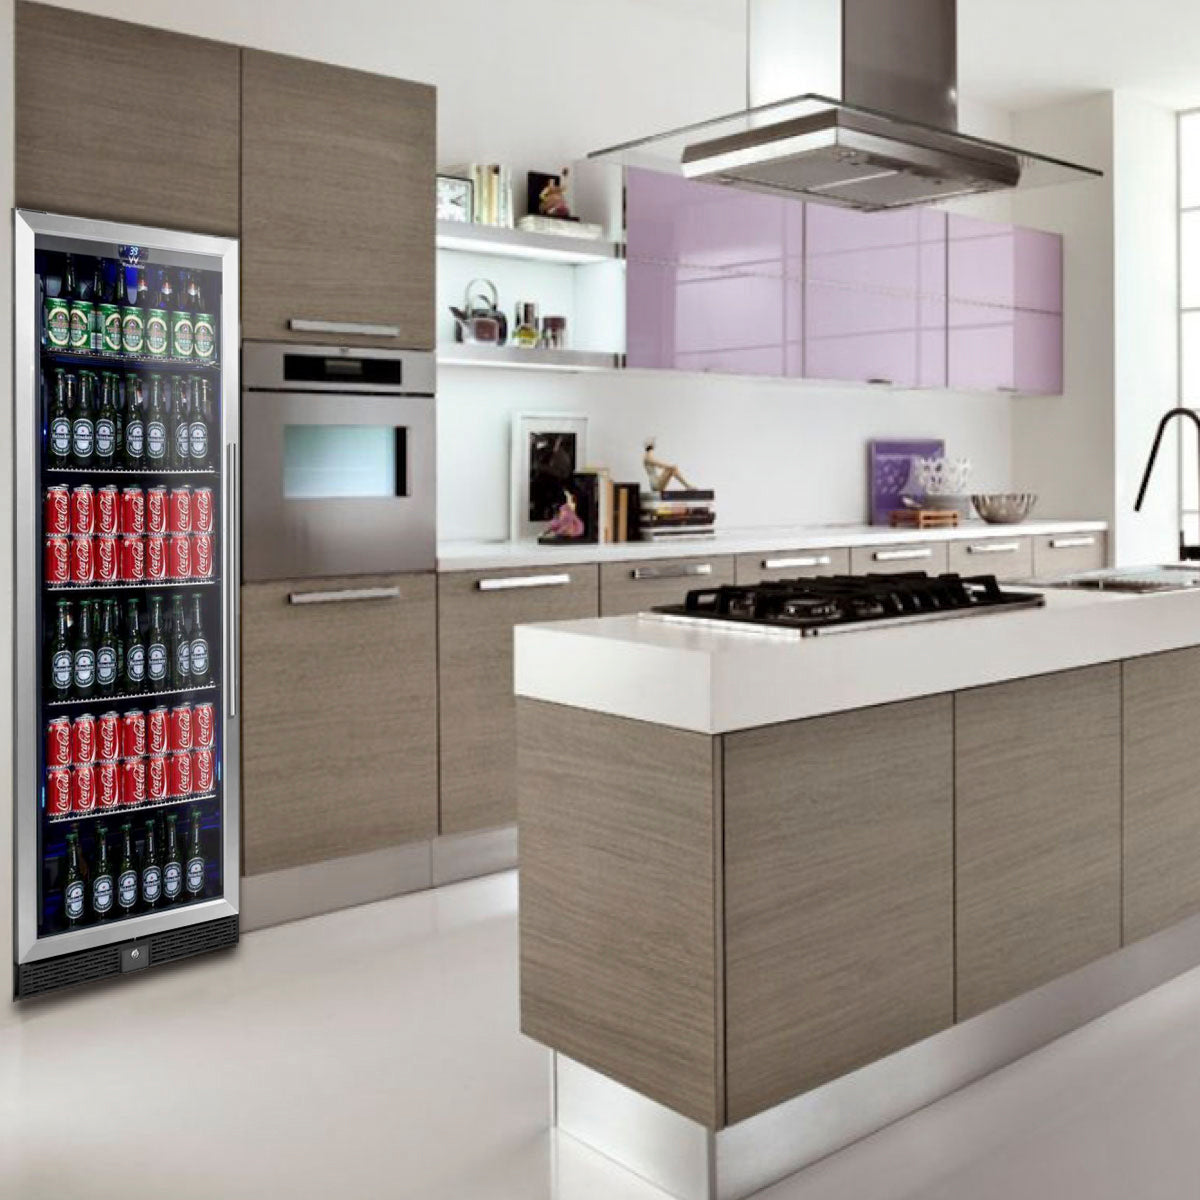 Kingsbottle 72" Large Beverage Refrigerator With Clear Glass Door KBU170BX-FG, LHH-Wine Coolers-The Wine Cooler Club